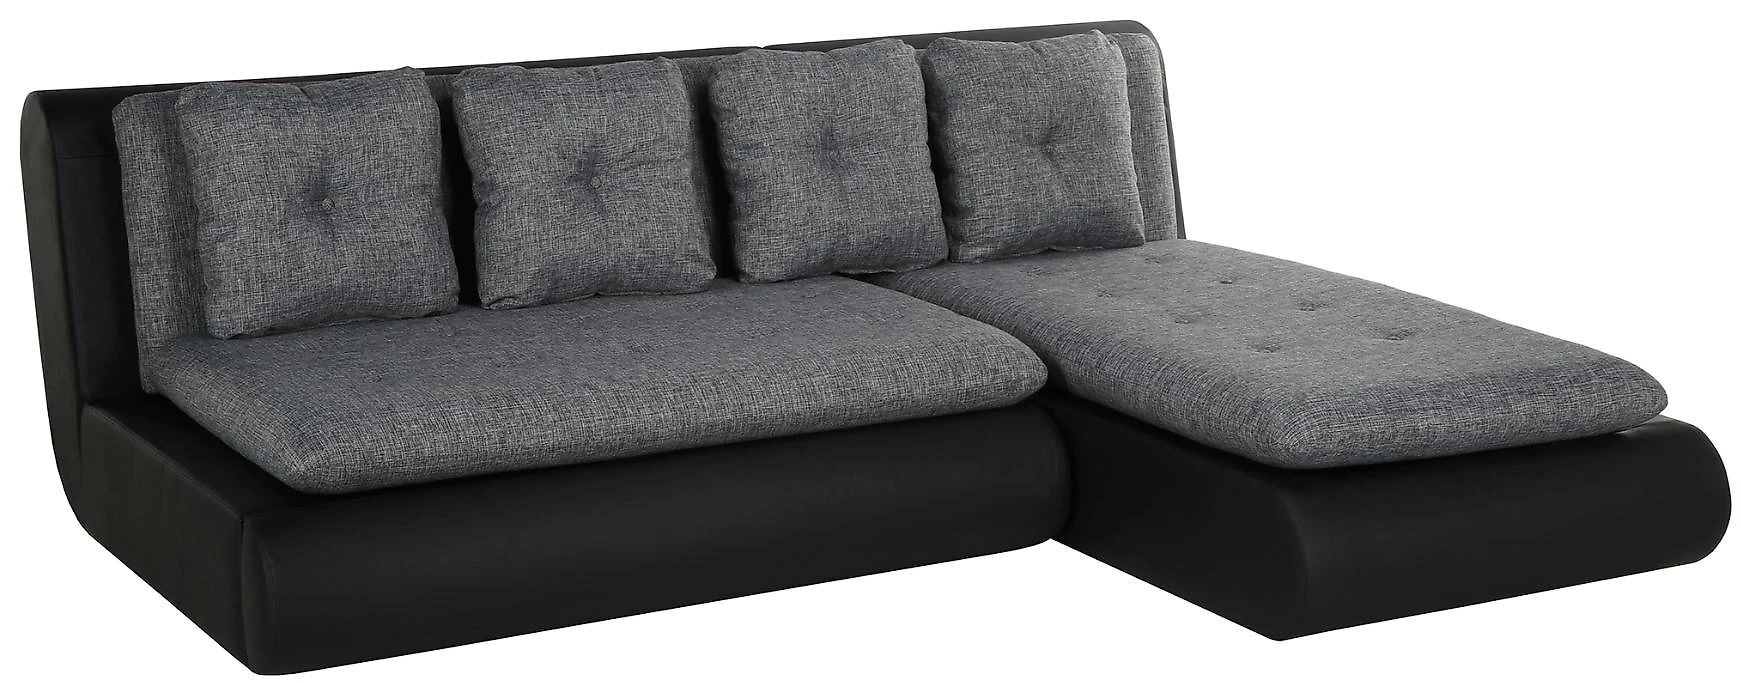 Угловой диван для офиса Кормак Мини Грей